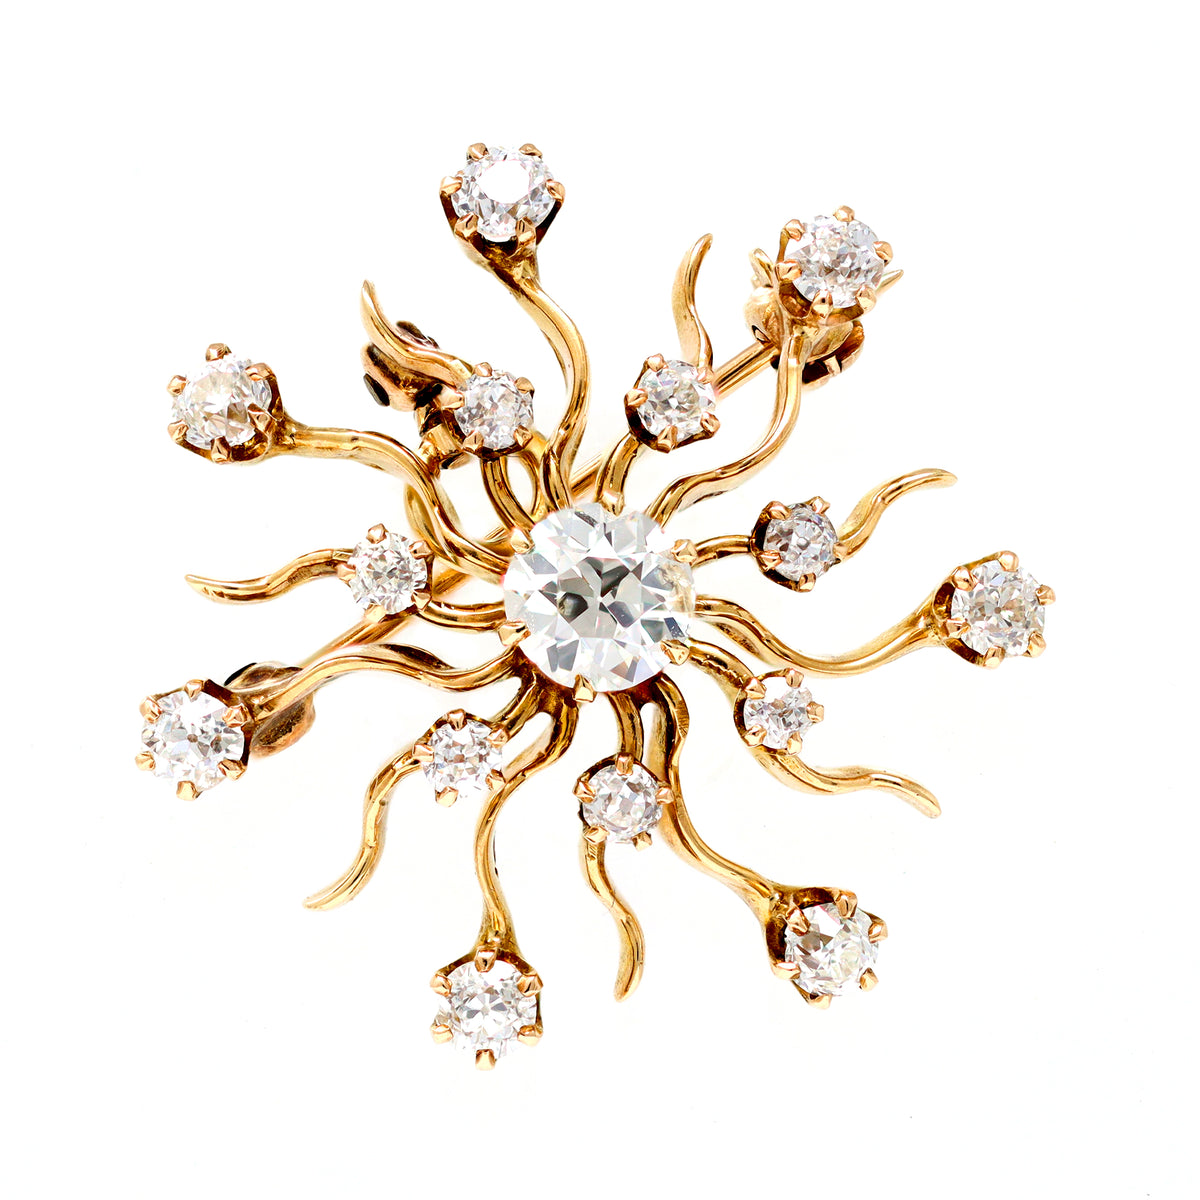 Victorian-diamond-starburst-brooch-and-pendant-set-in-14-karat-yellow-gold-front-view-2000x2000